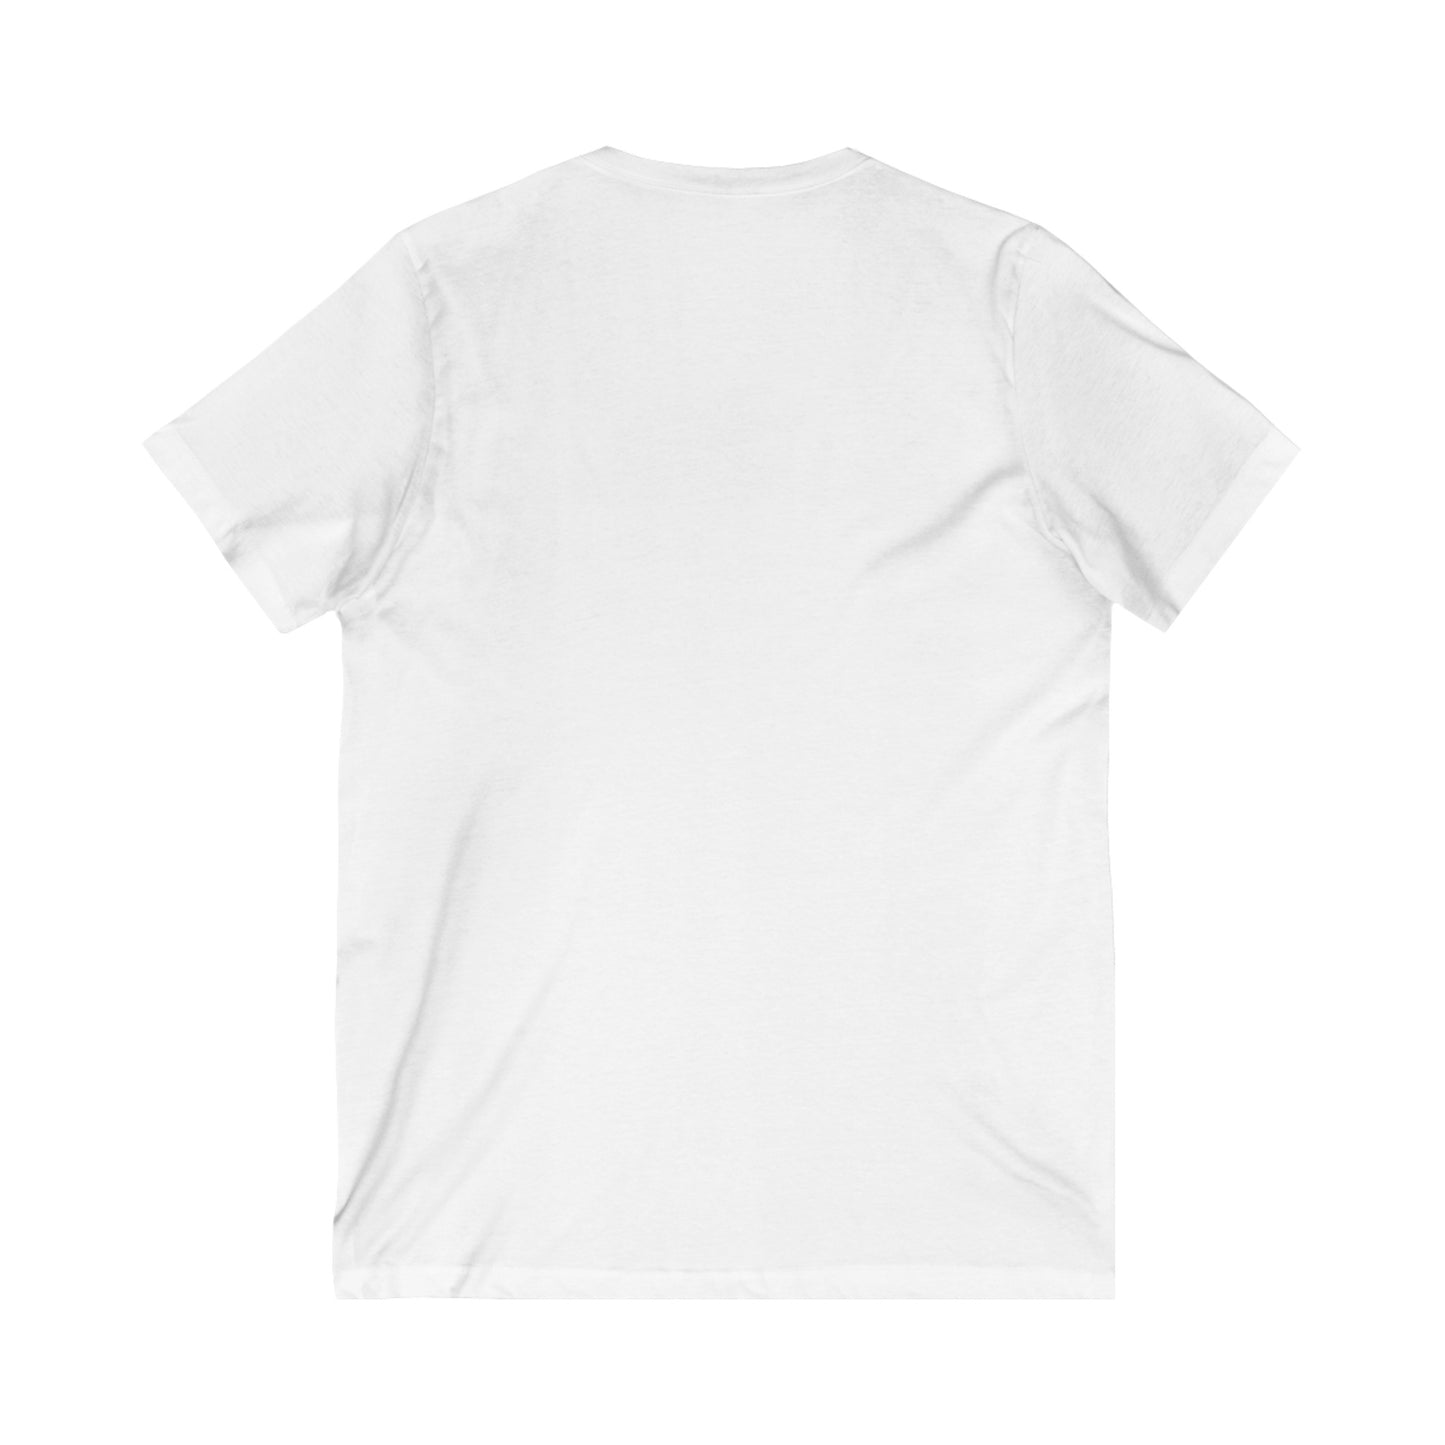 Mile High Satire T-Shirt - B&W Square Logo  V-Neck